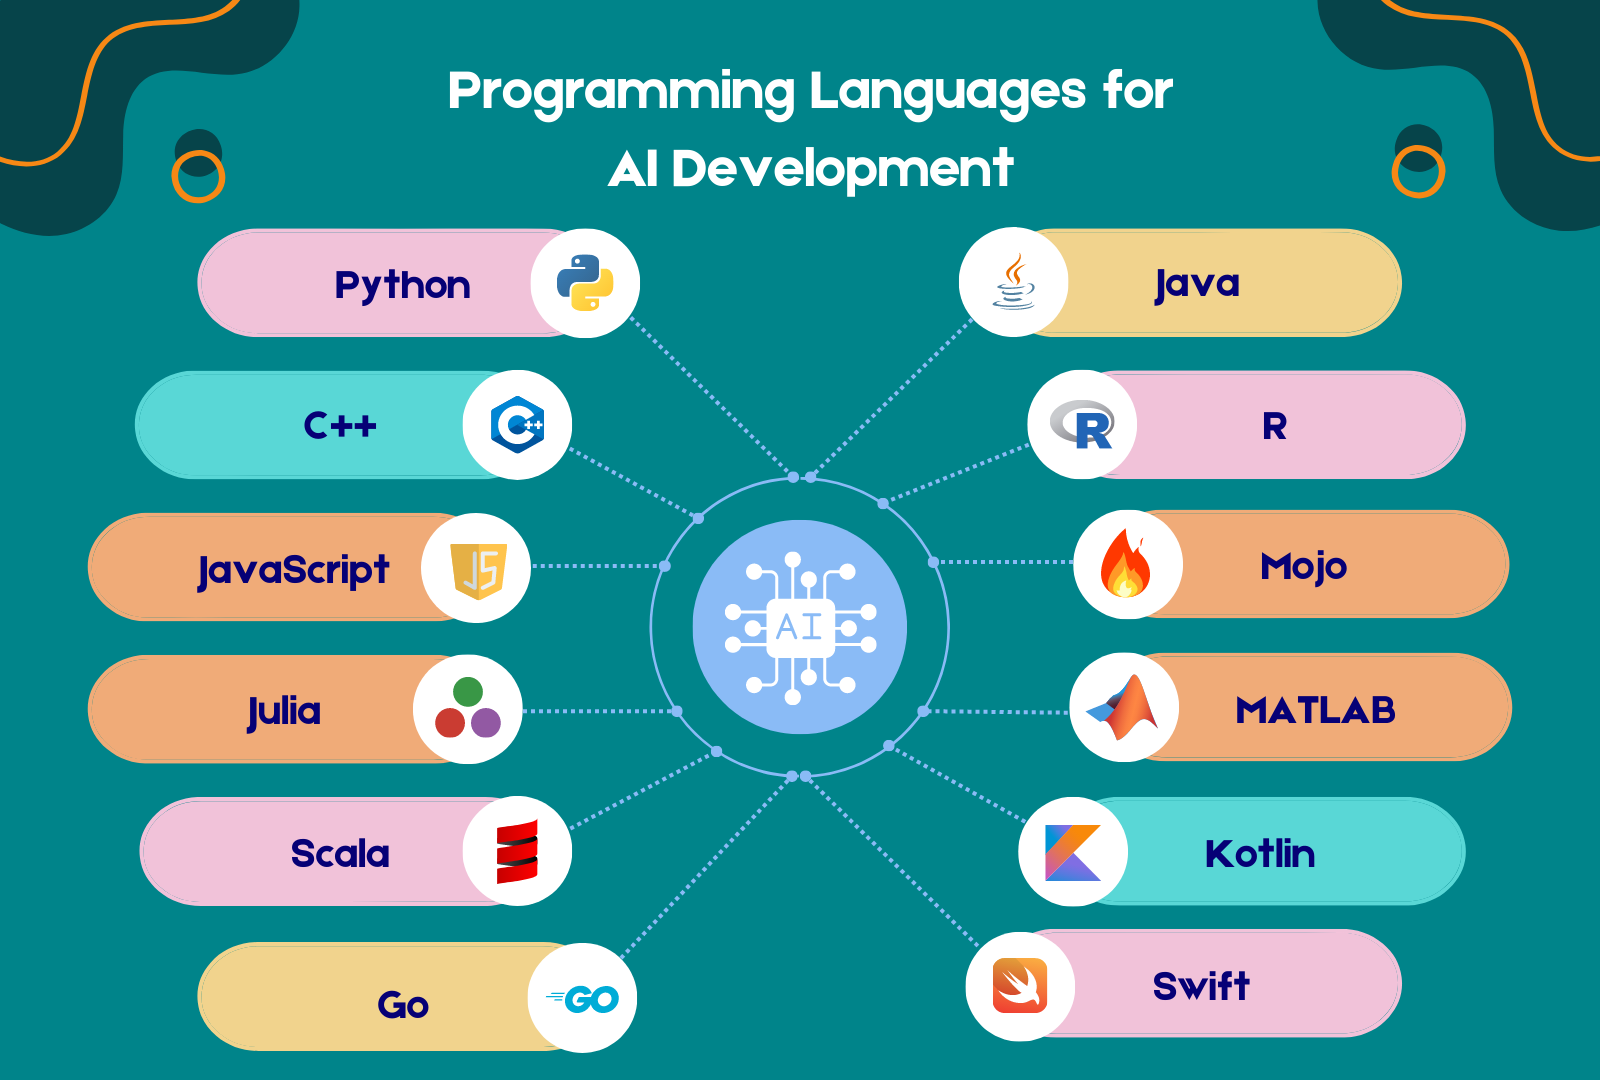 Collage of AI Programming Languages: Python, C++, JavaScript, Julia, Scala, Go. Each language offers distinct strengths for AI development.